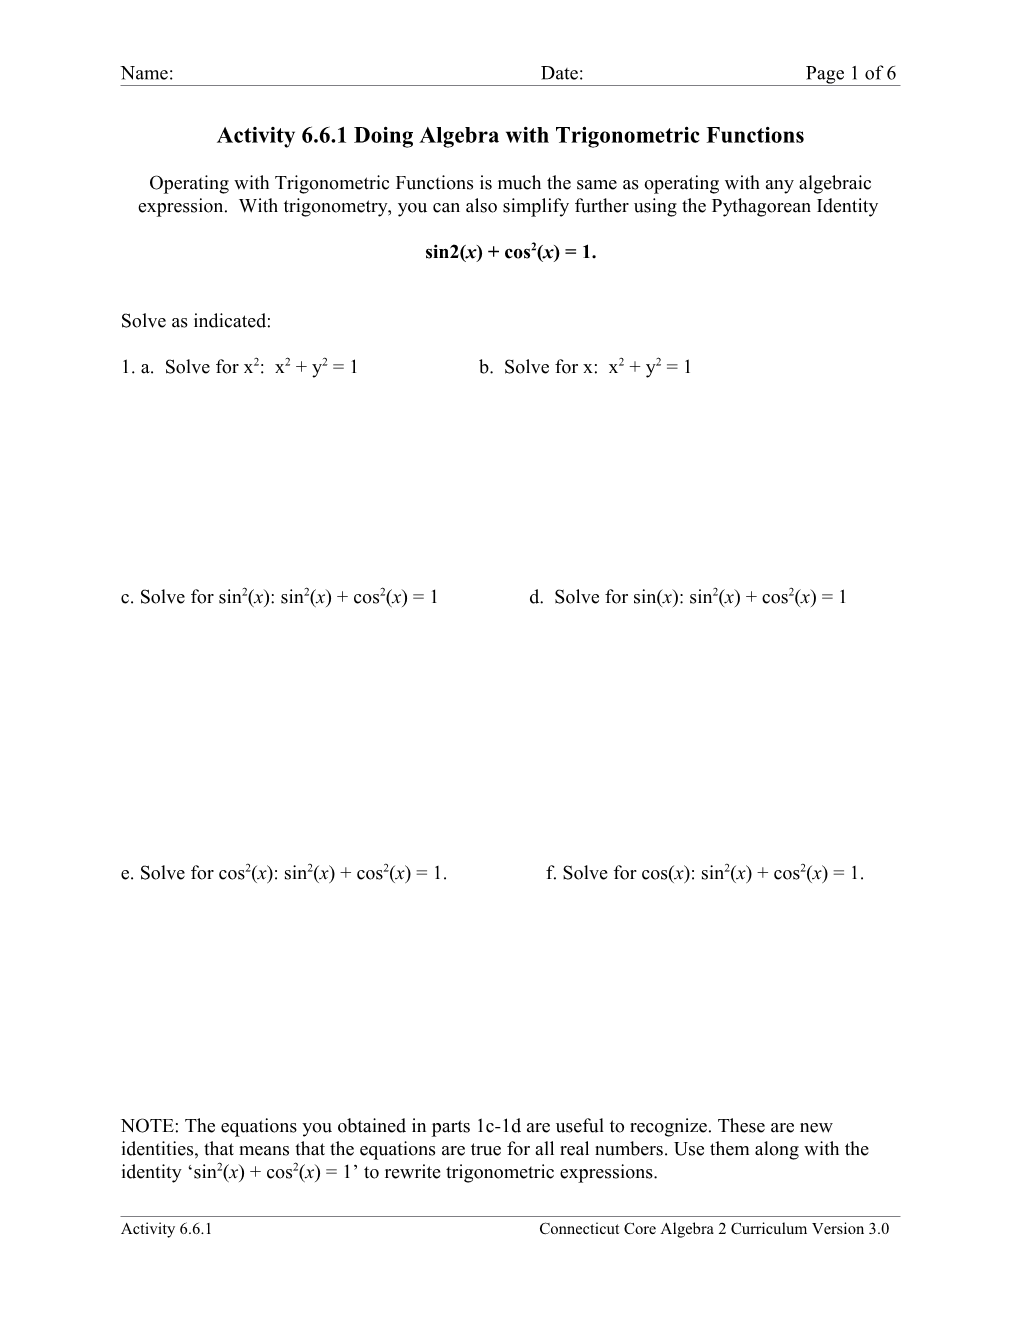 Activity 6.6.1 Doing Algebra with Trigonometric Functions